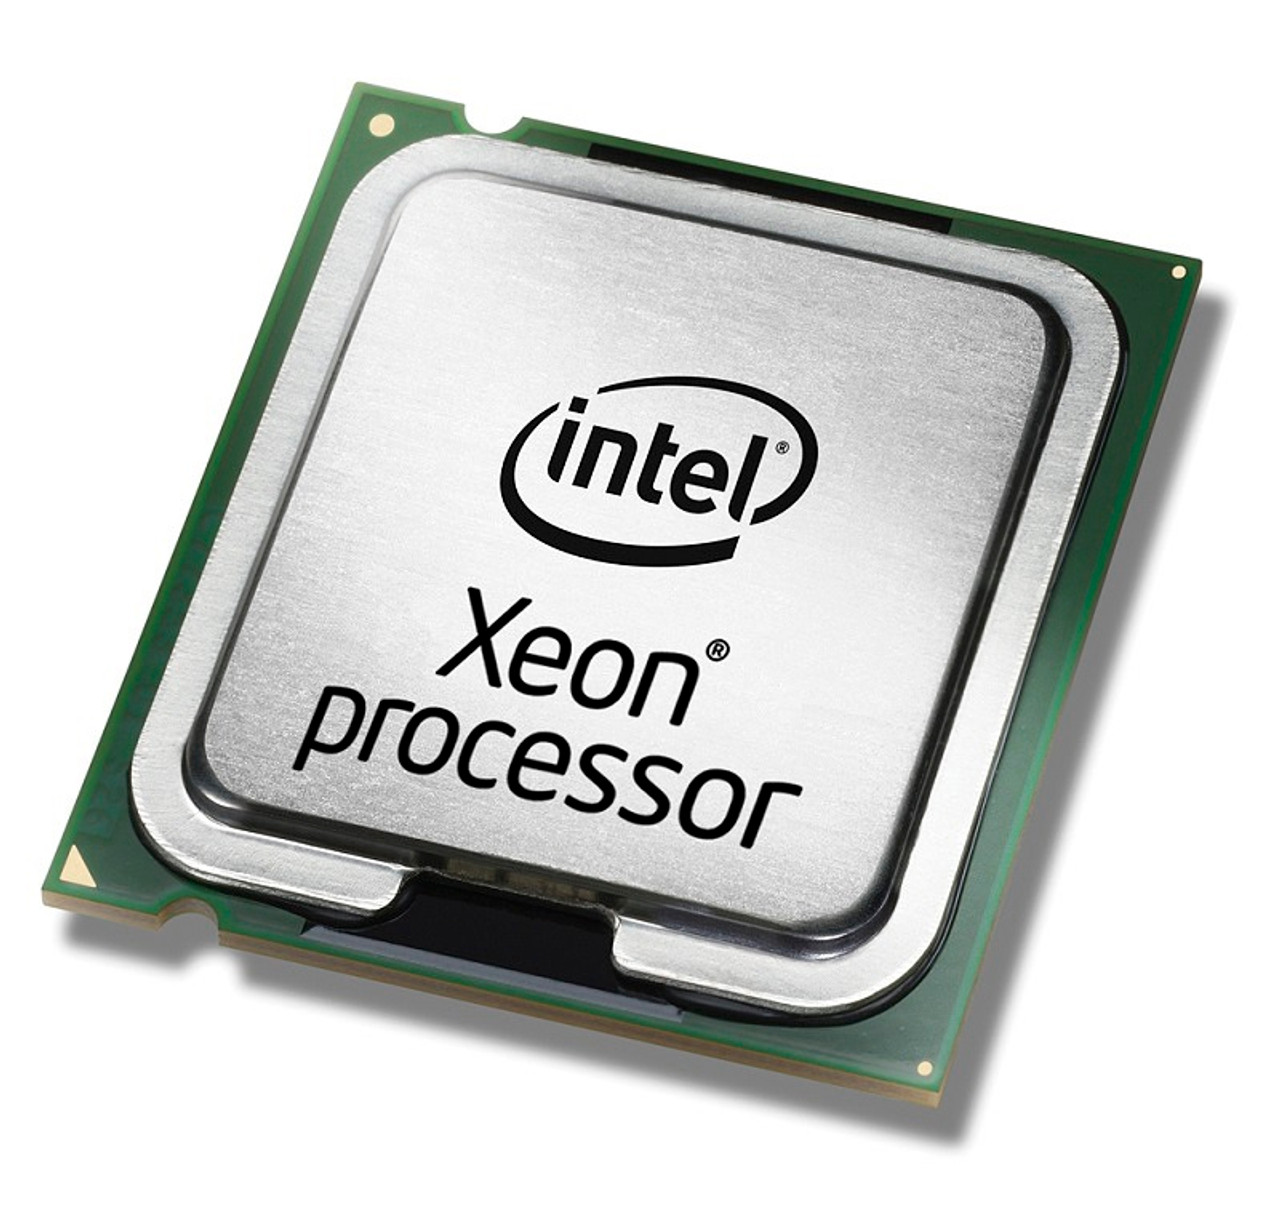 841821-B21 - HP Intel Xeon E5-2660v3 10-core 2.60GHz 25mb L3 Cache 9.6 Gt/s Qpi Speed Socket Fclga2011-3 22nm 105w Processor Only for Xl450 Gen9 Server